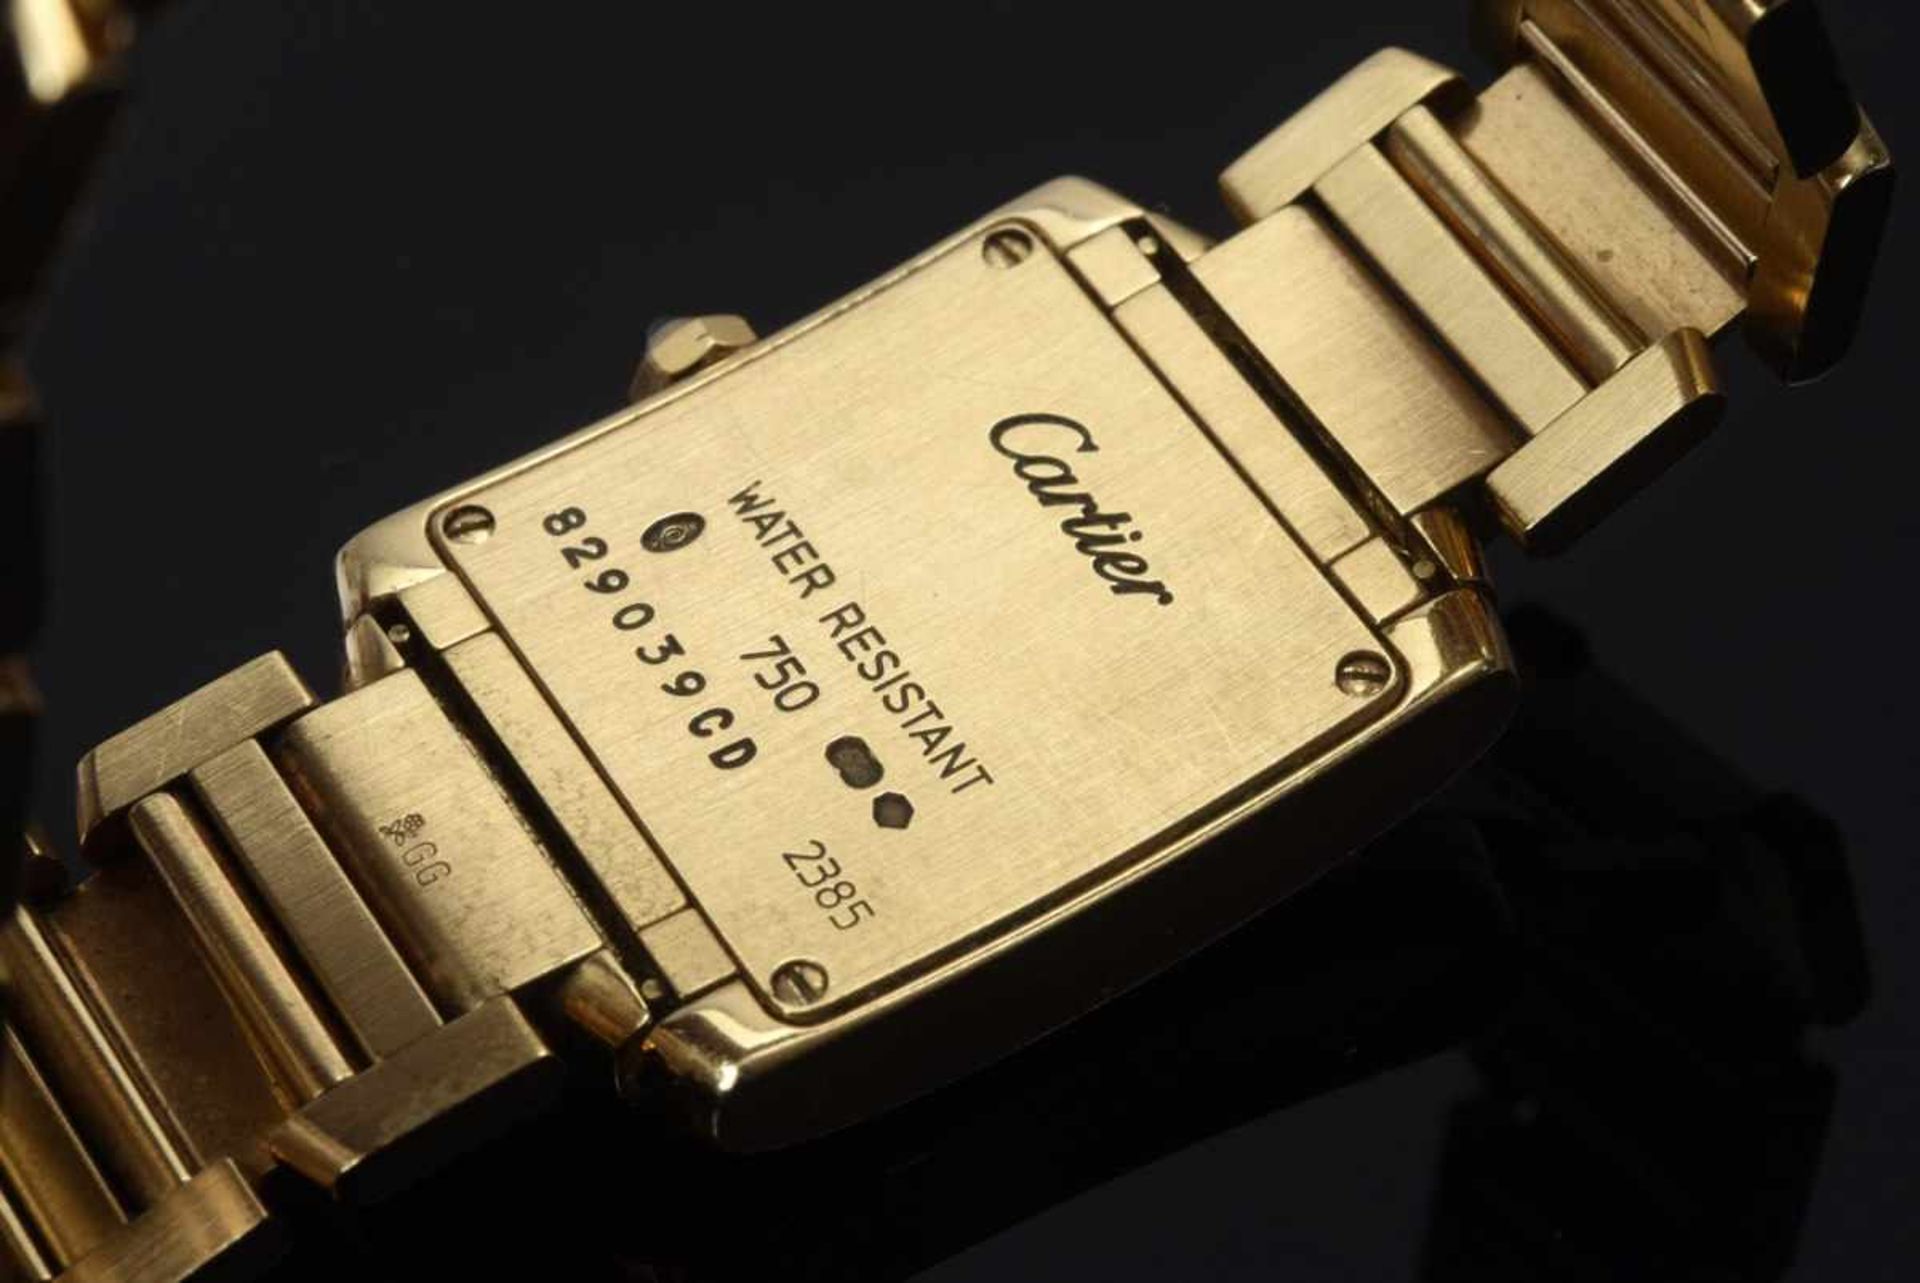 GG 750 Cartier "Tank Française" ladies' watch, quartz movement, dial with roman numerals, - Image 2 of 6